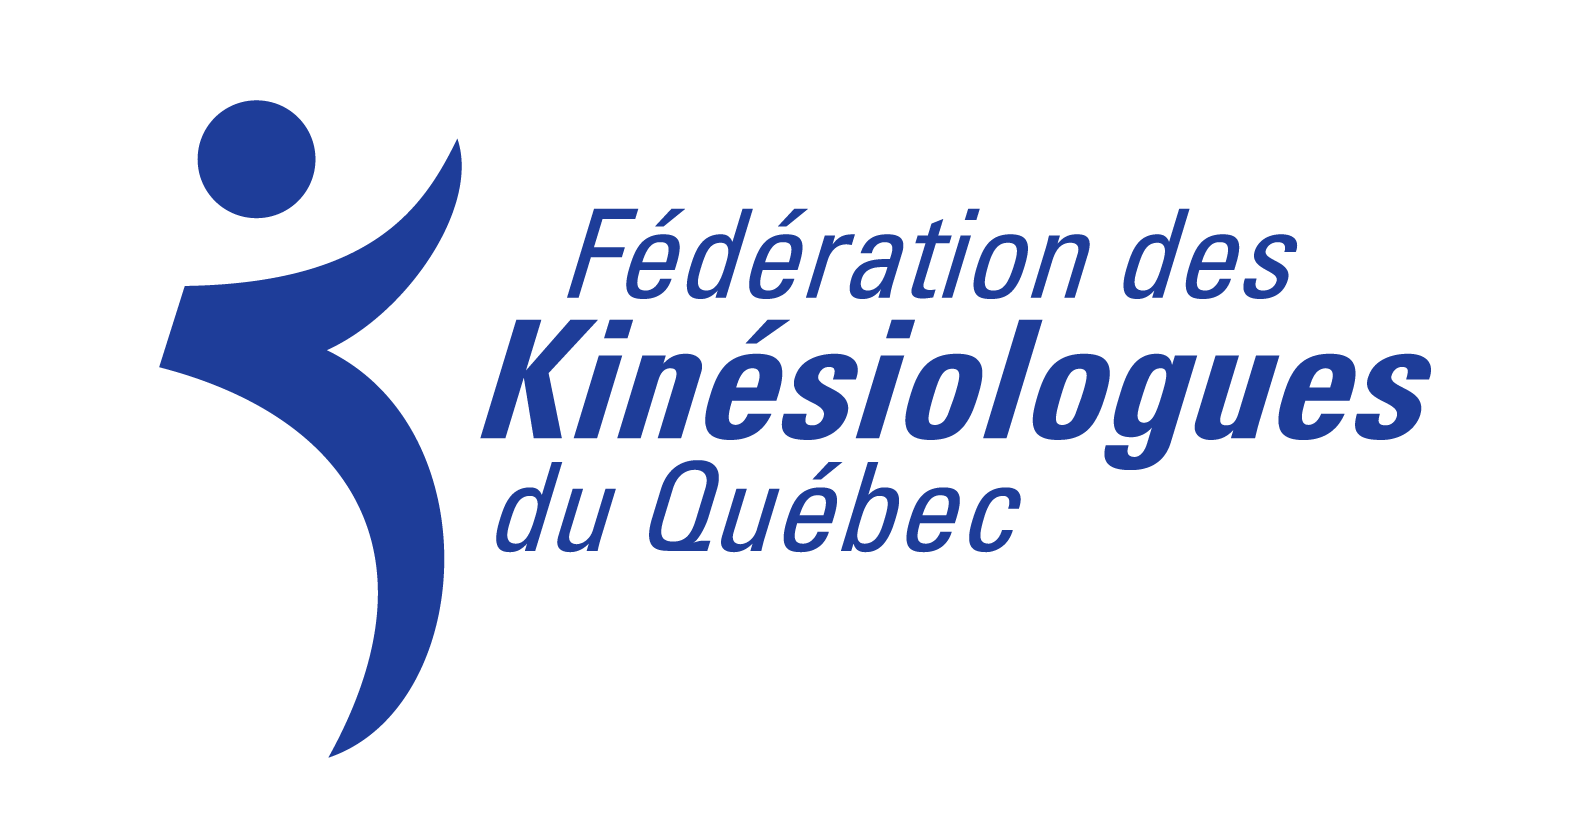 Federation de Kinesiologues du Quebec